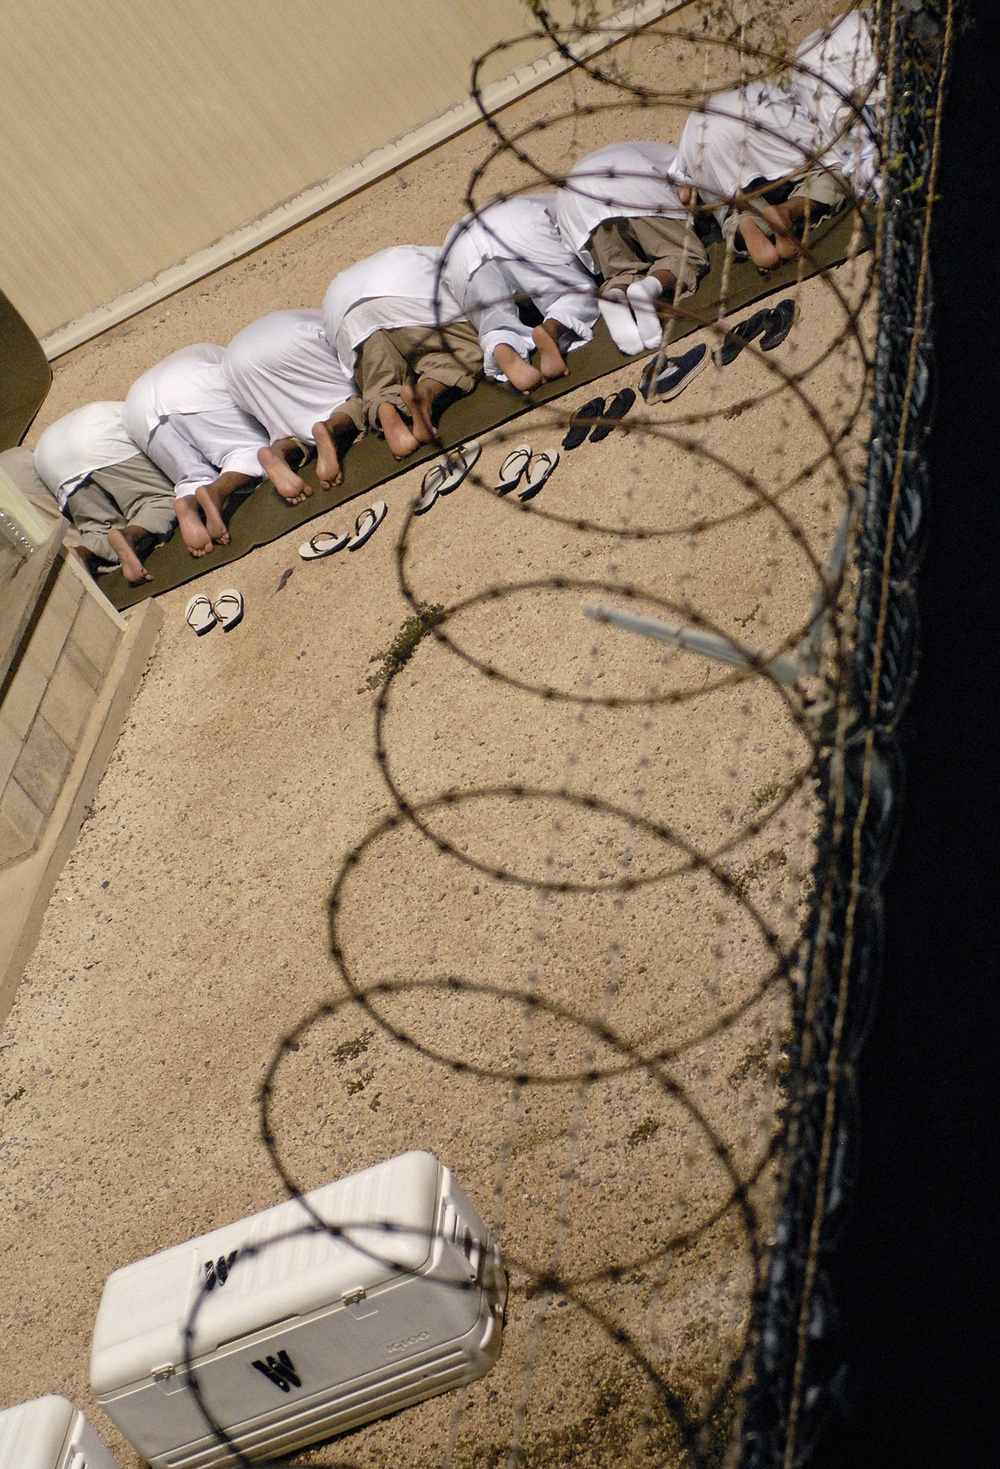 JTF Guantanamo Detainees Bow During Morning Prayer